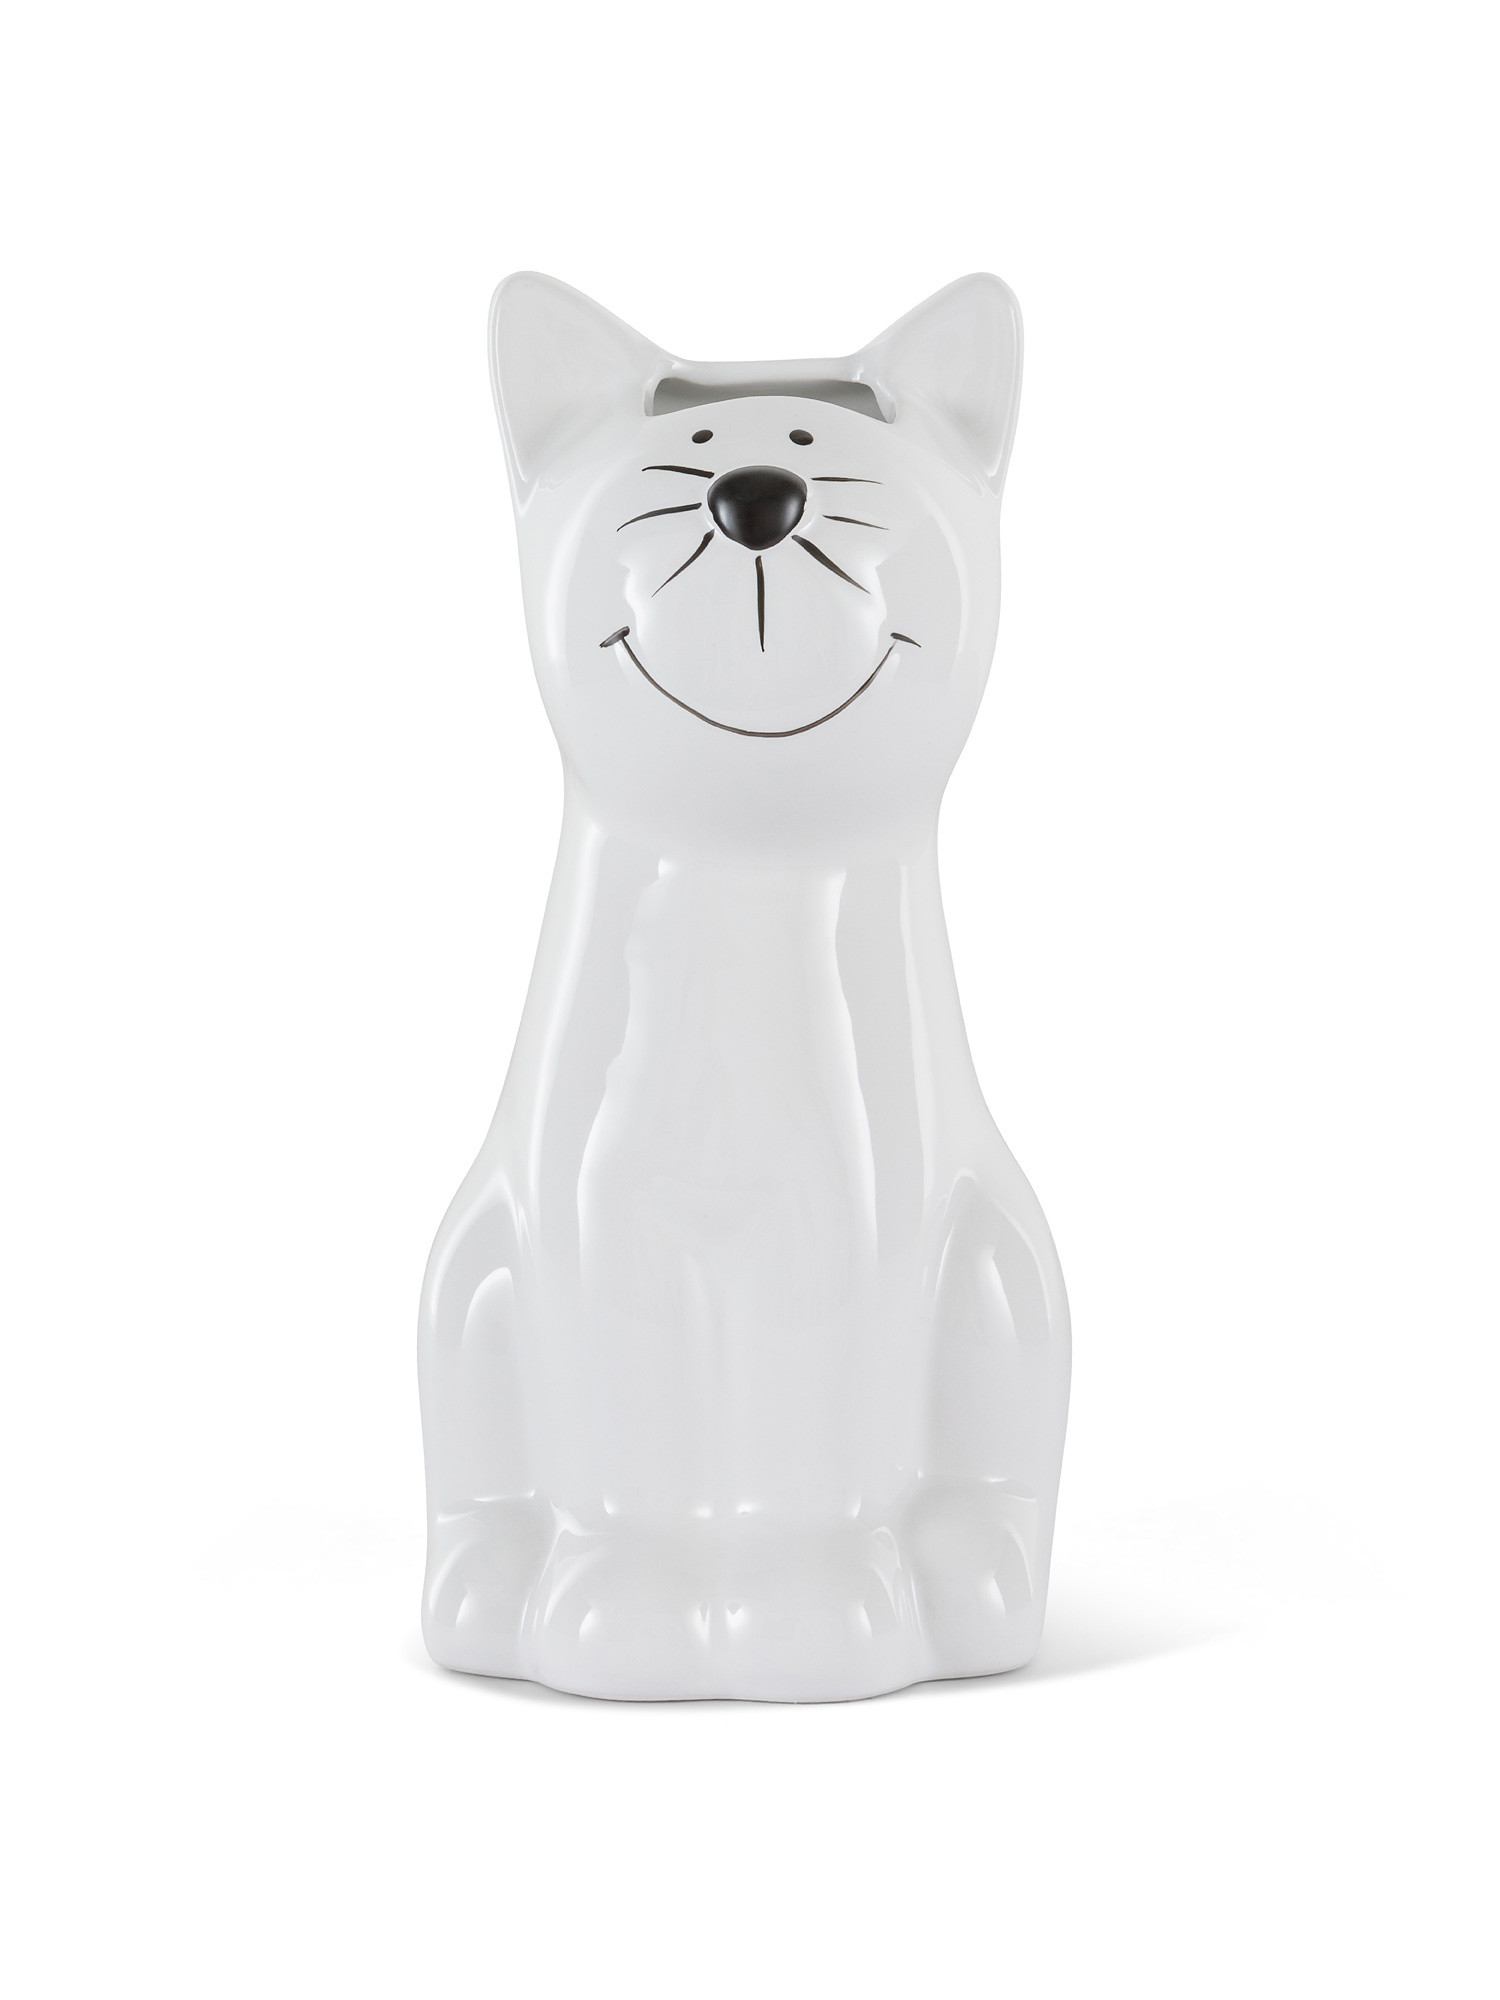 Umidificatore ceramica a gatto, Bianco, large image number 0